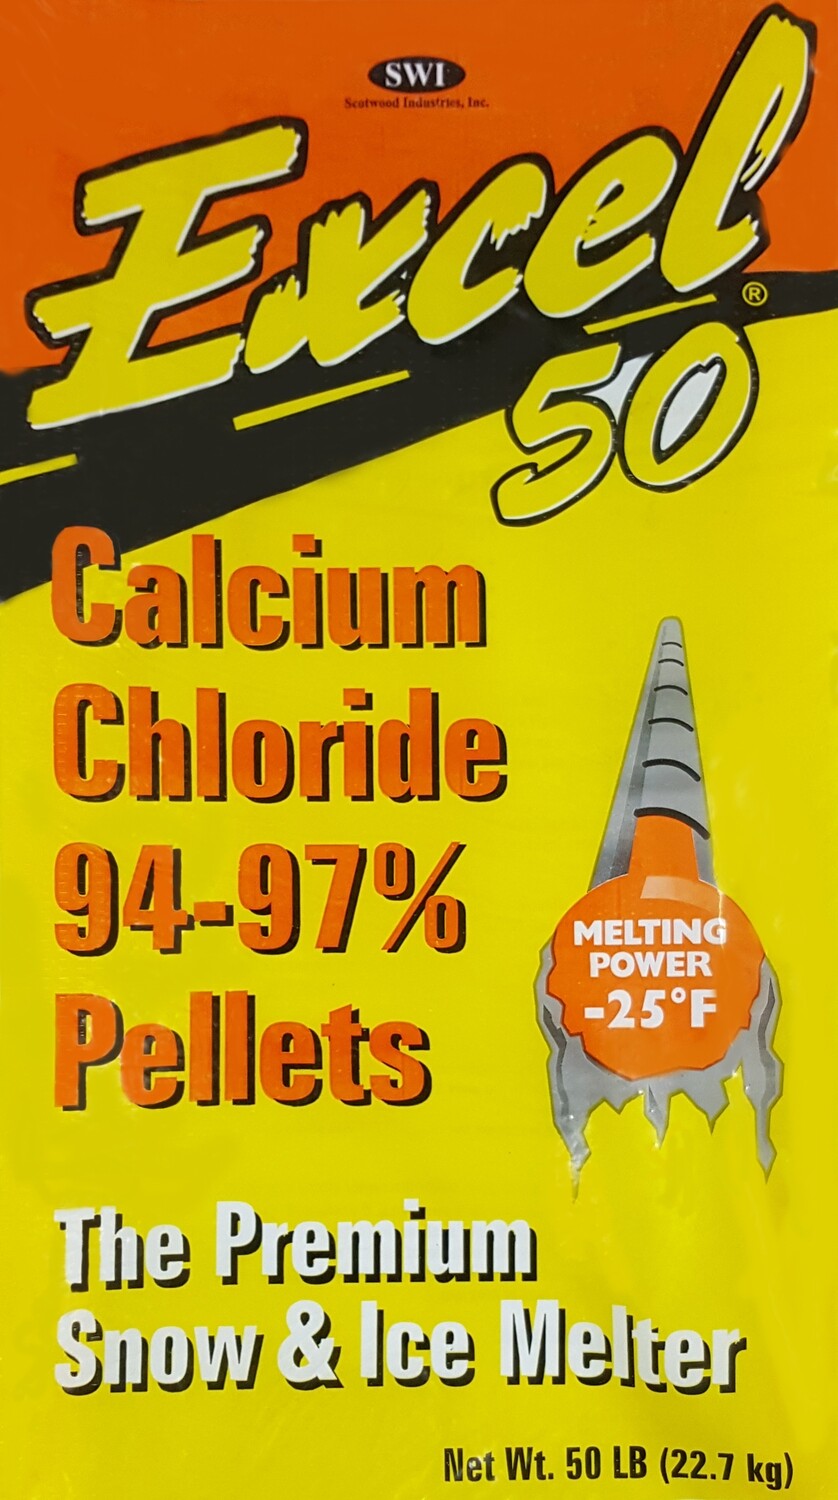 Excel 50 Calcium Chloride - Single Bag